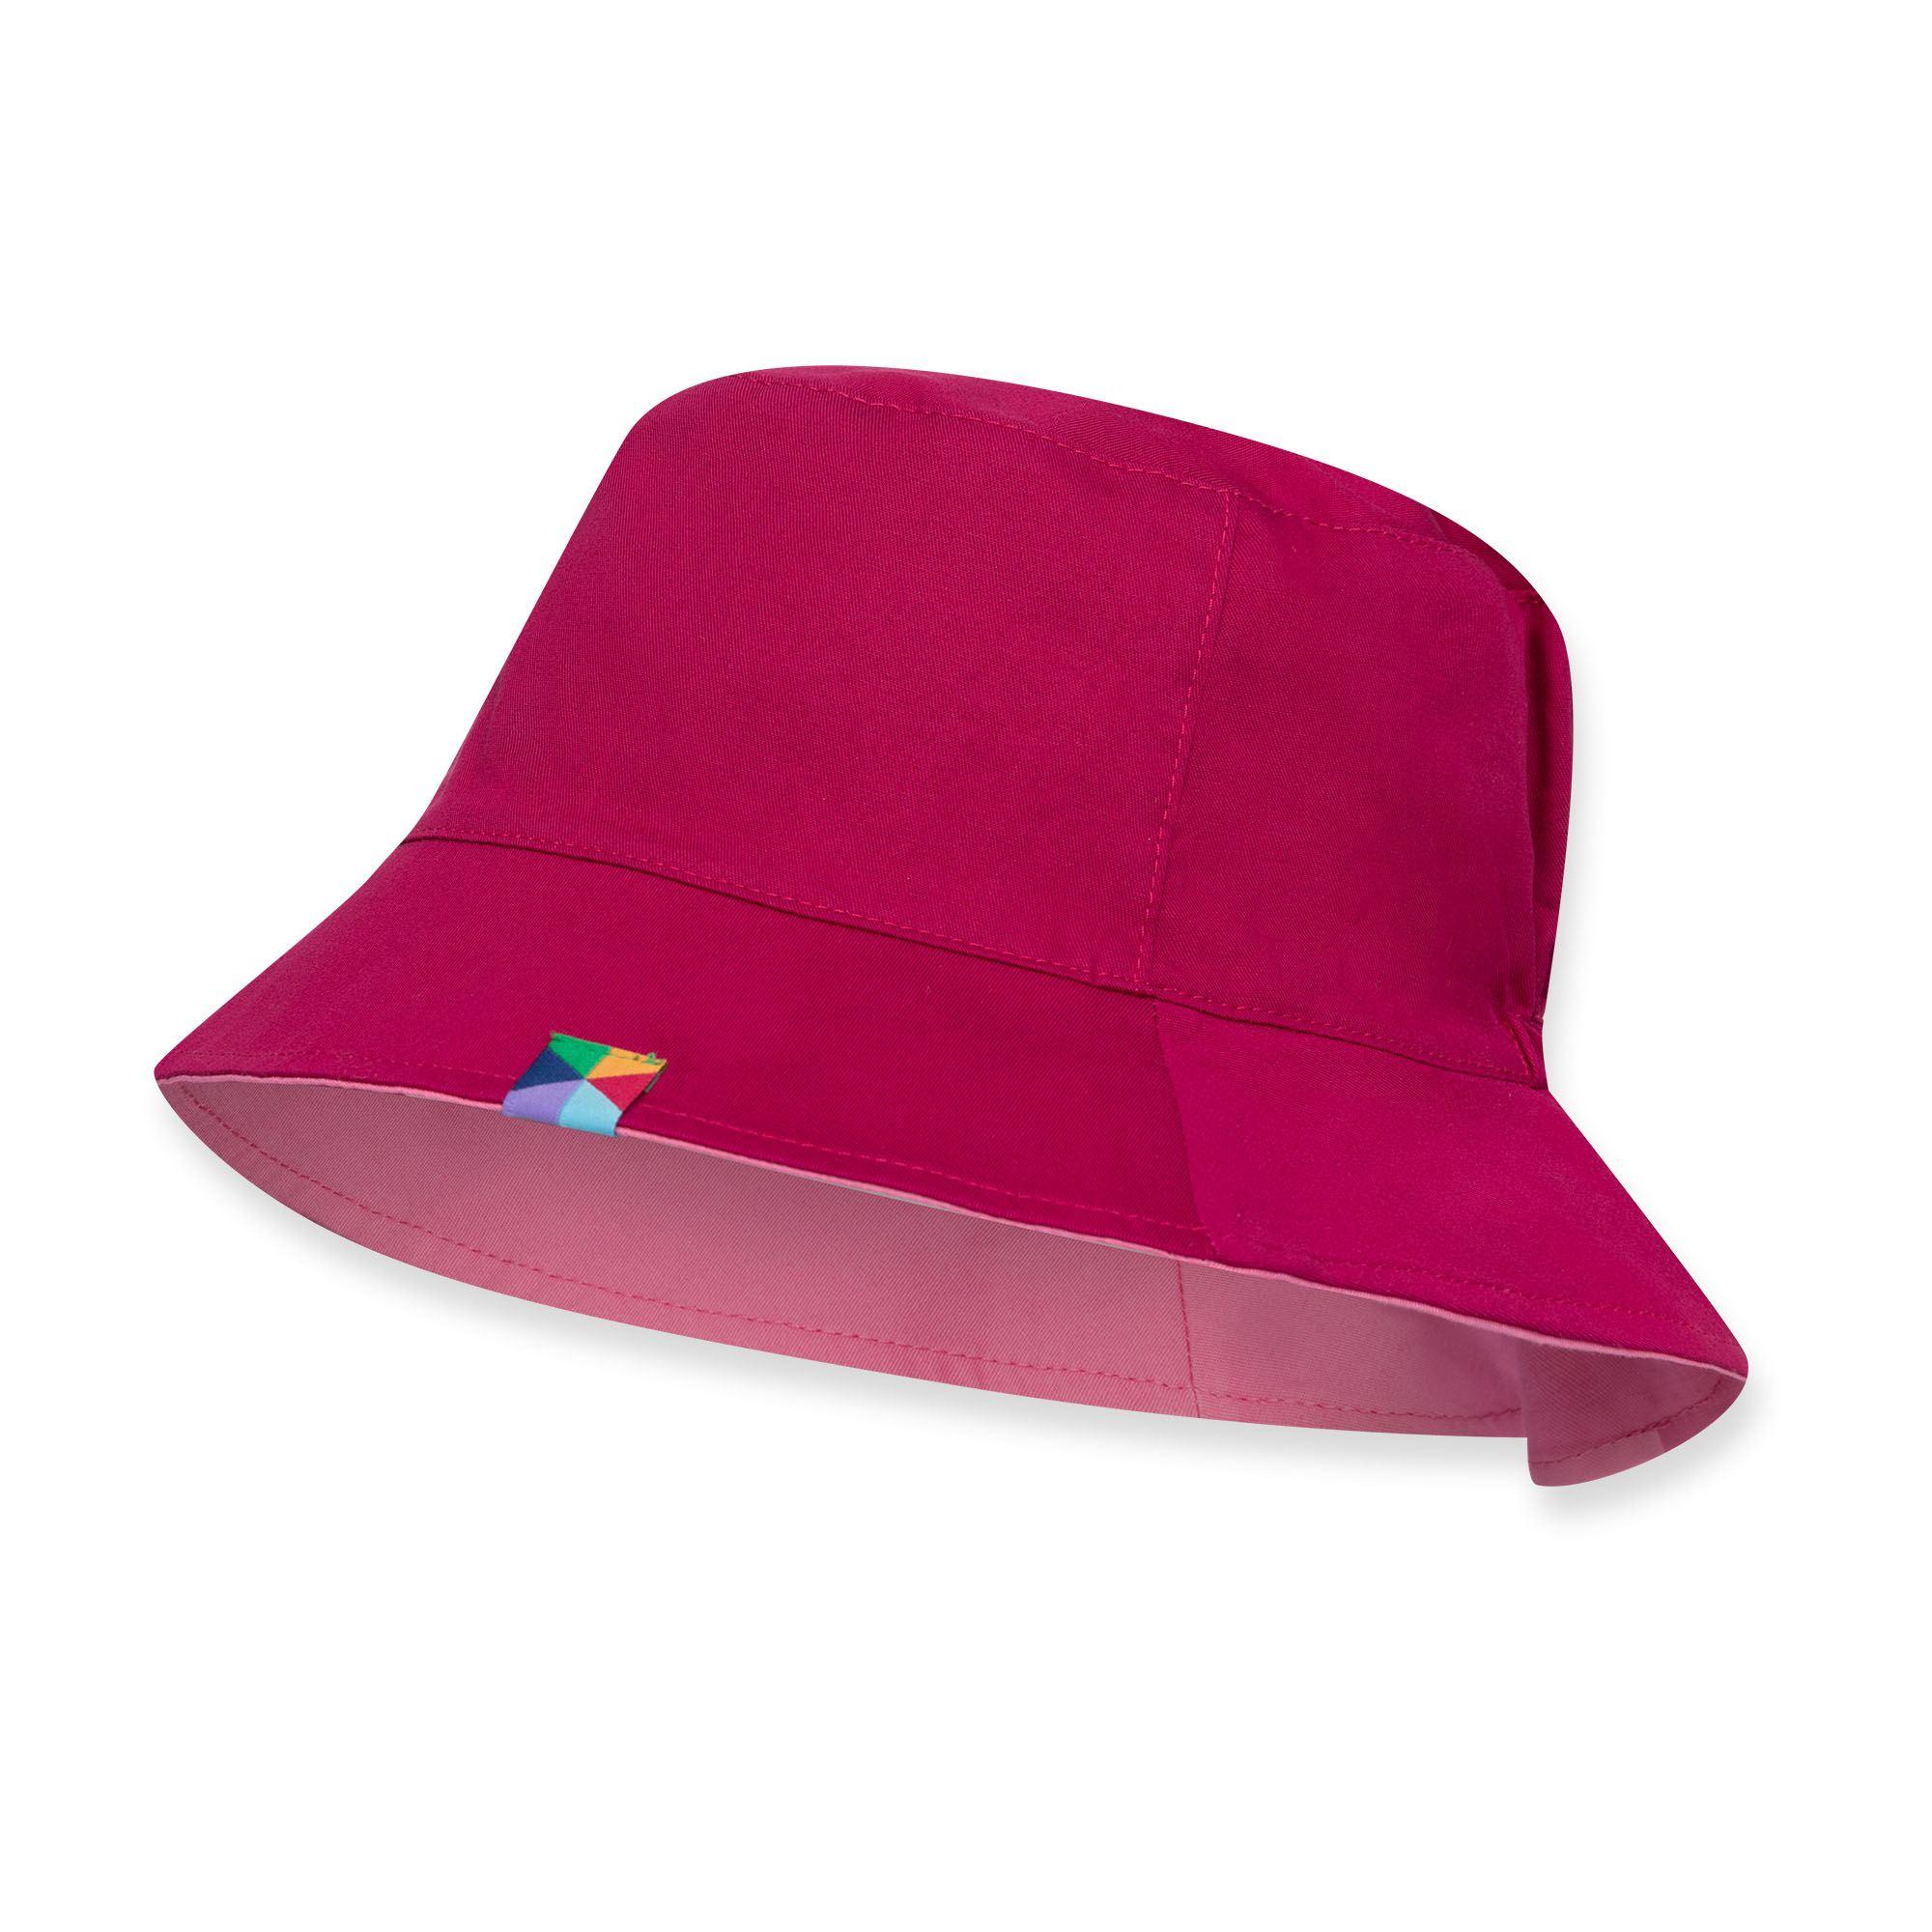 Amarantowo-różowy kapelusz dwustronny